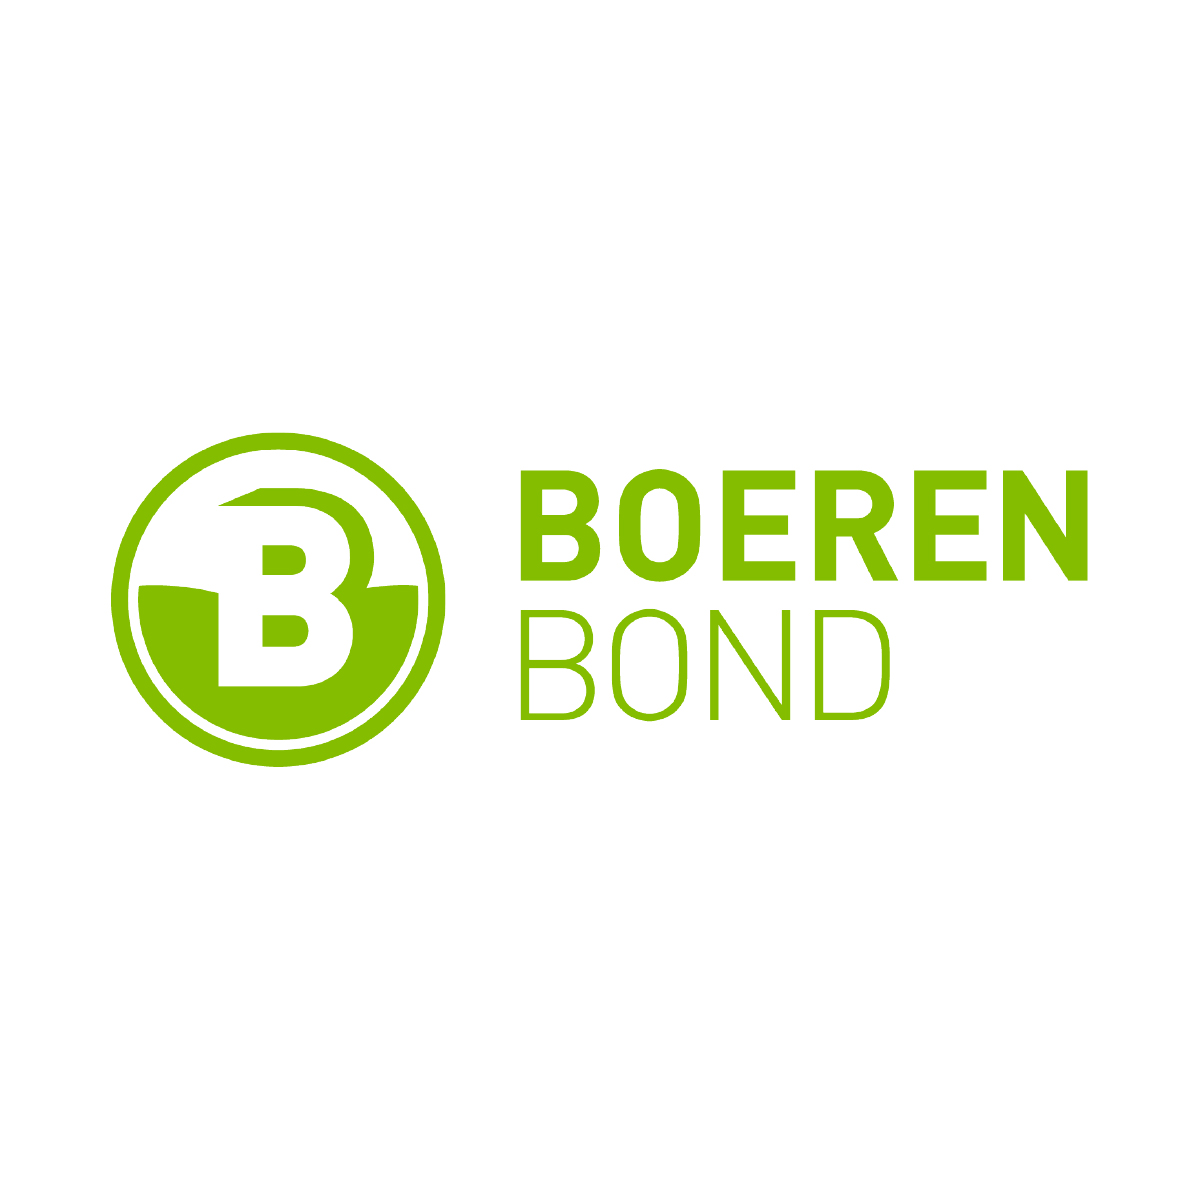 Boerenbond logo square